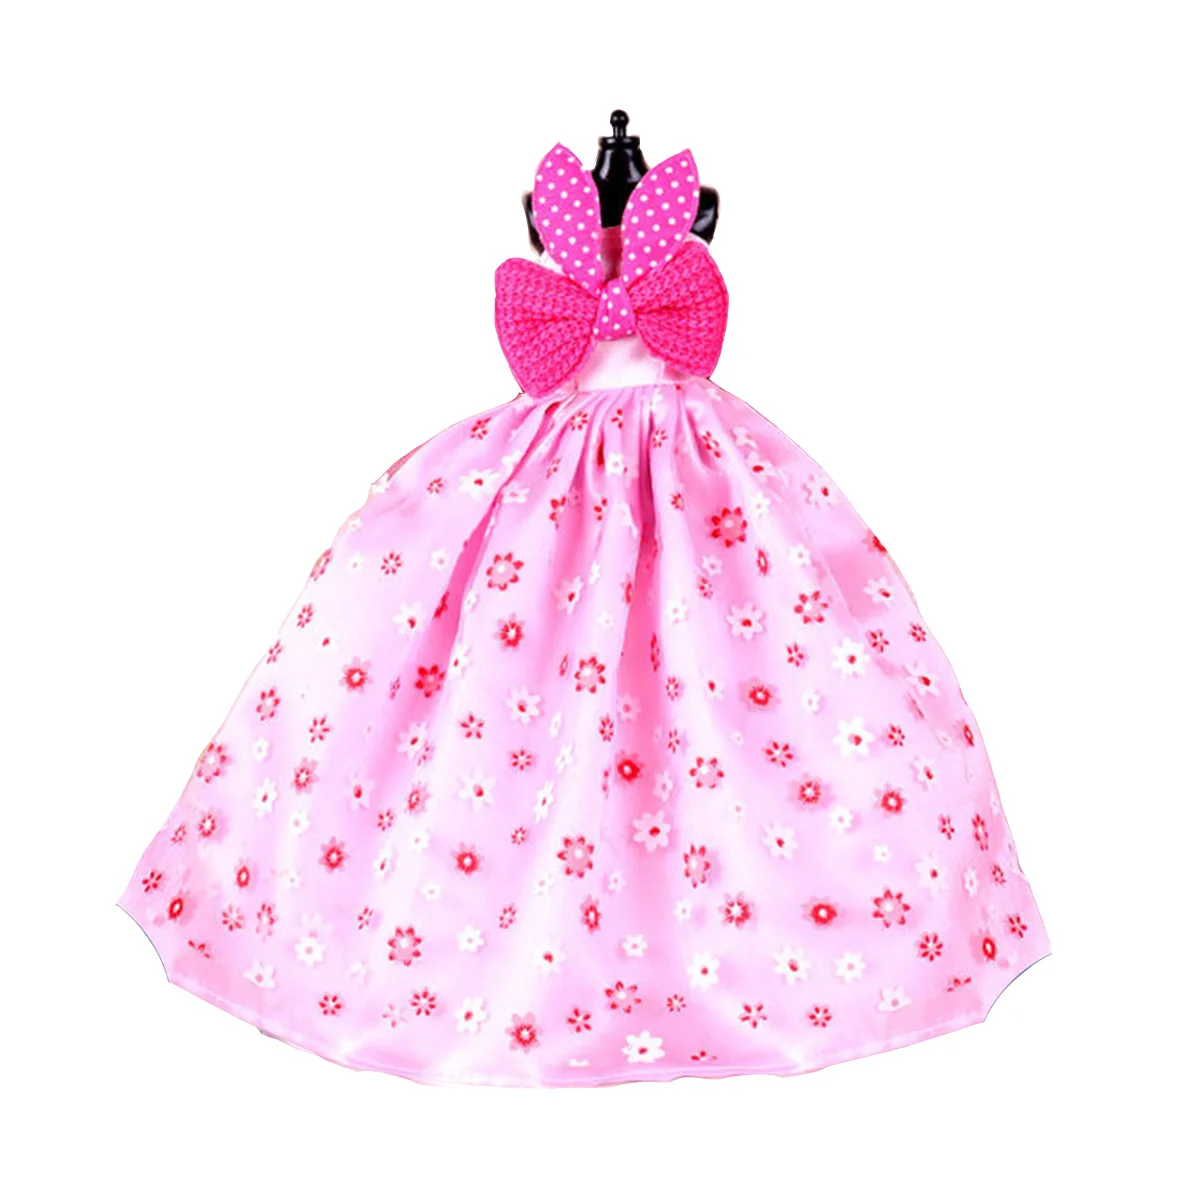 Платье для куклы 11 дюймов 1 шт. | Игрушки и хобби